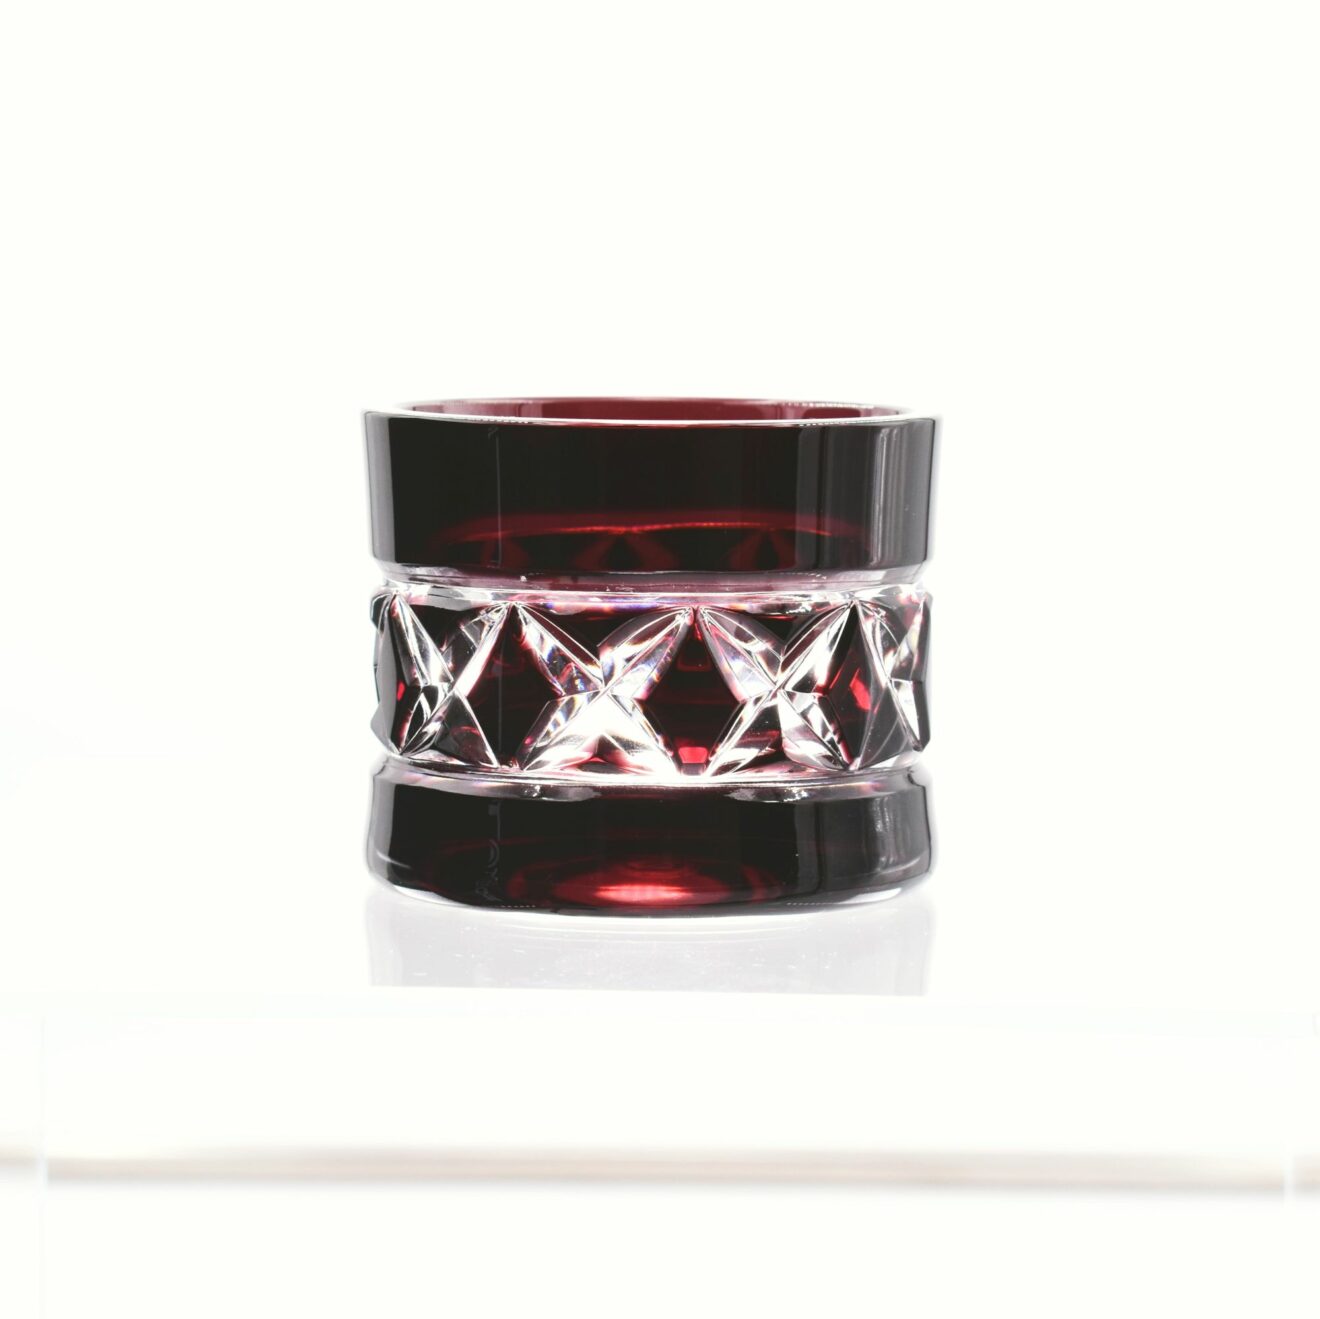 Teelichthalter “Jacquard”, 6 cm. Cristallerie de Montbronn, rubinrotes Kristallglas